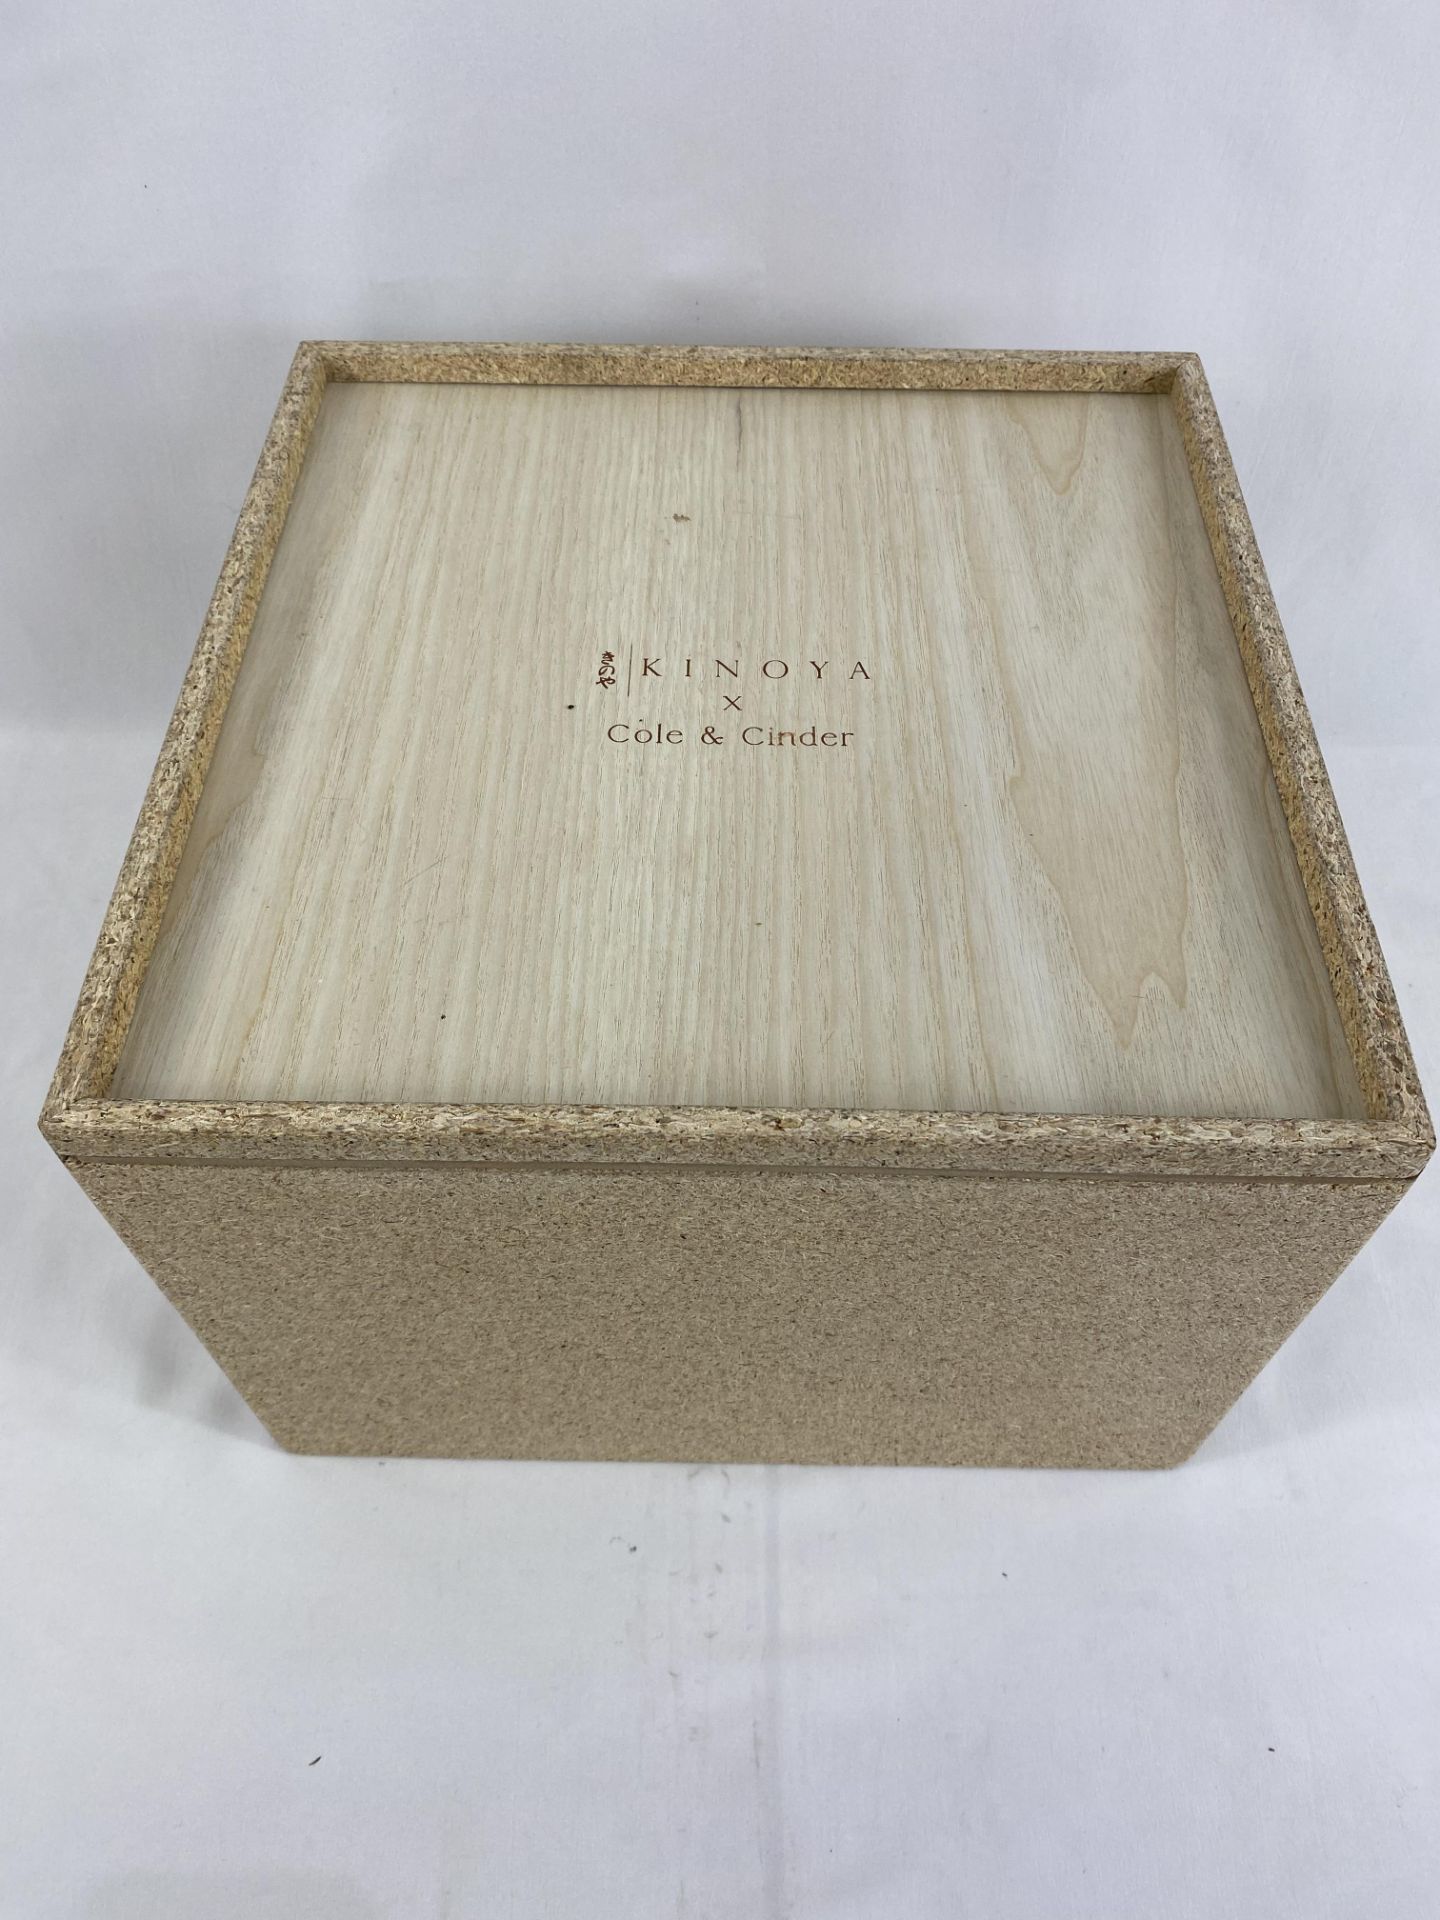 Kinoya Cole and Cinder ceramic sake set in original box. - Image 4 of 4